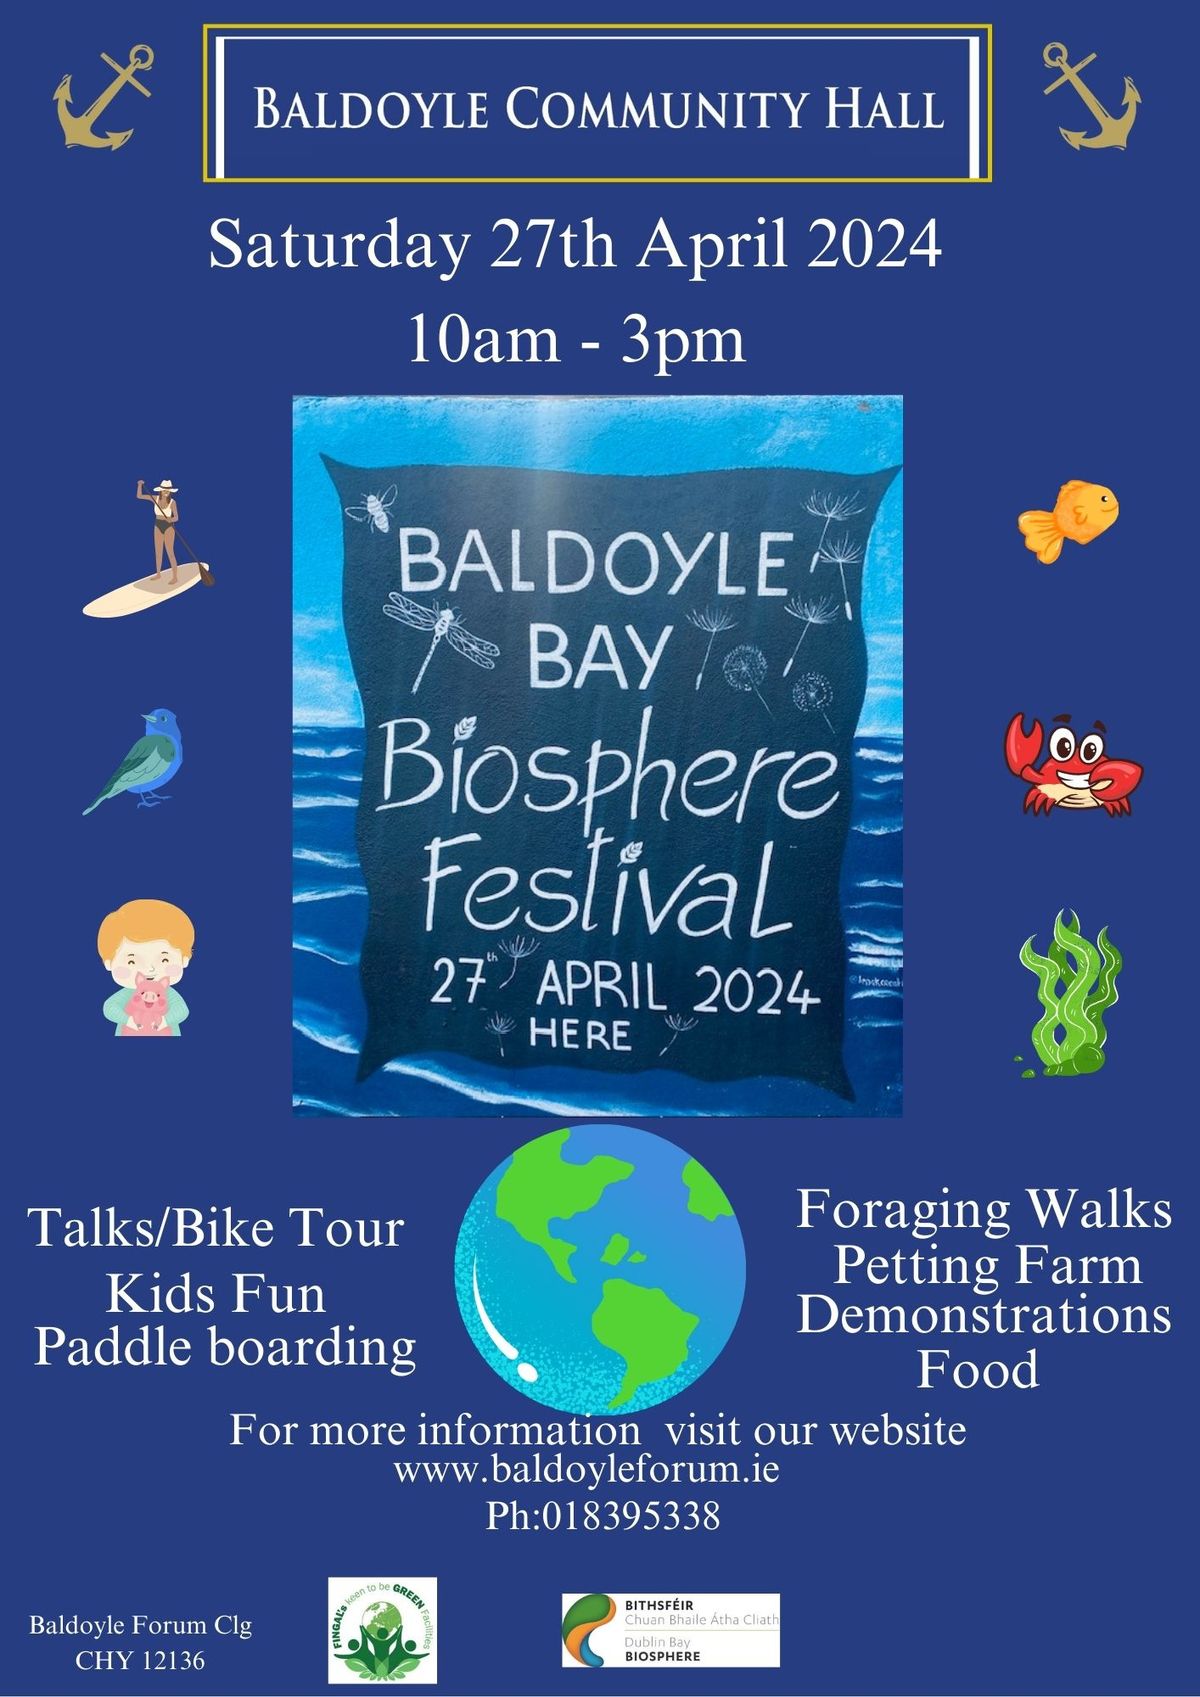 Baldoyle Bay Biosphere Festival 